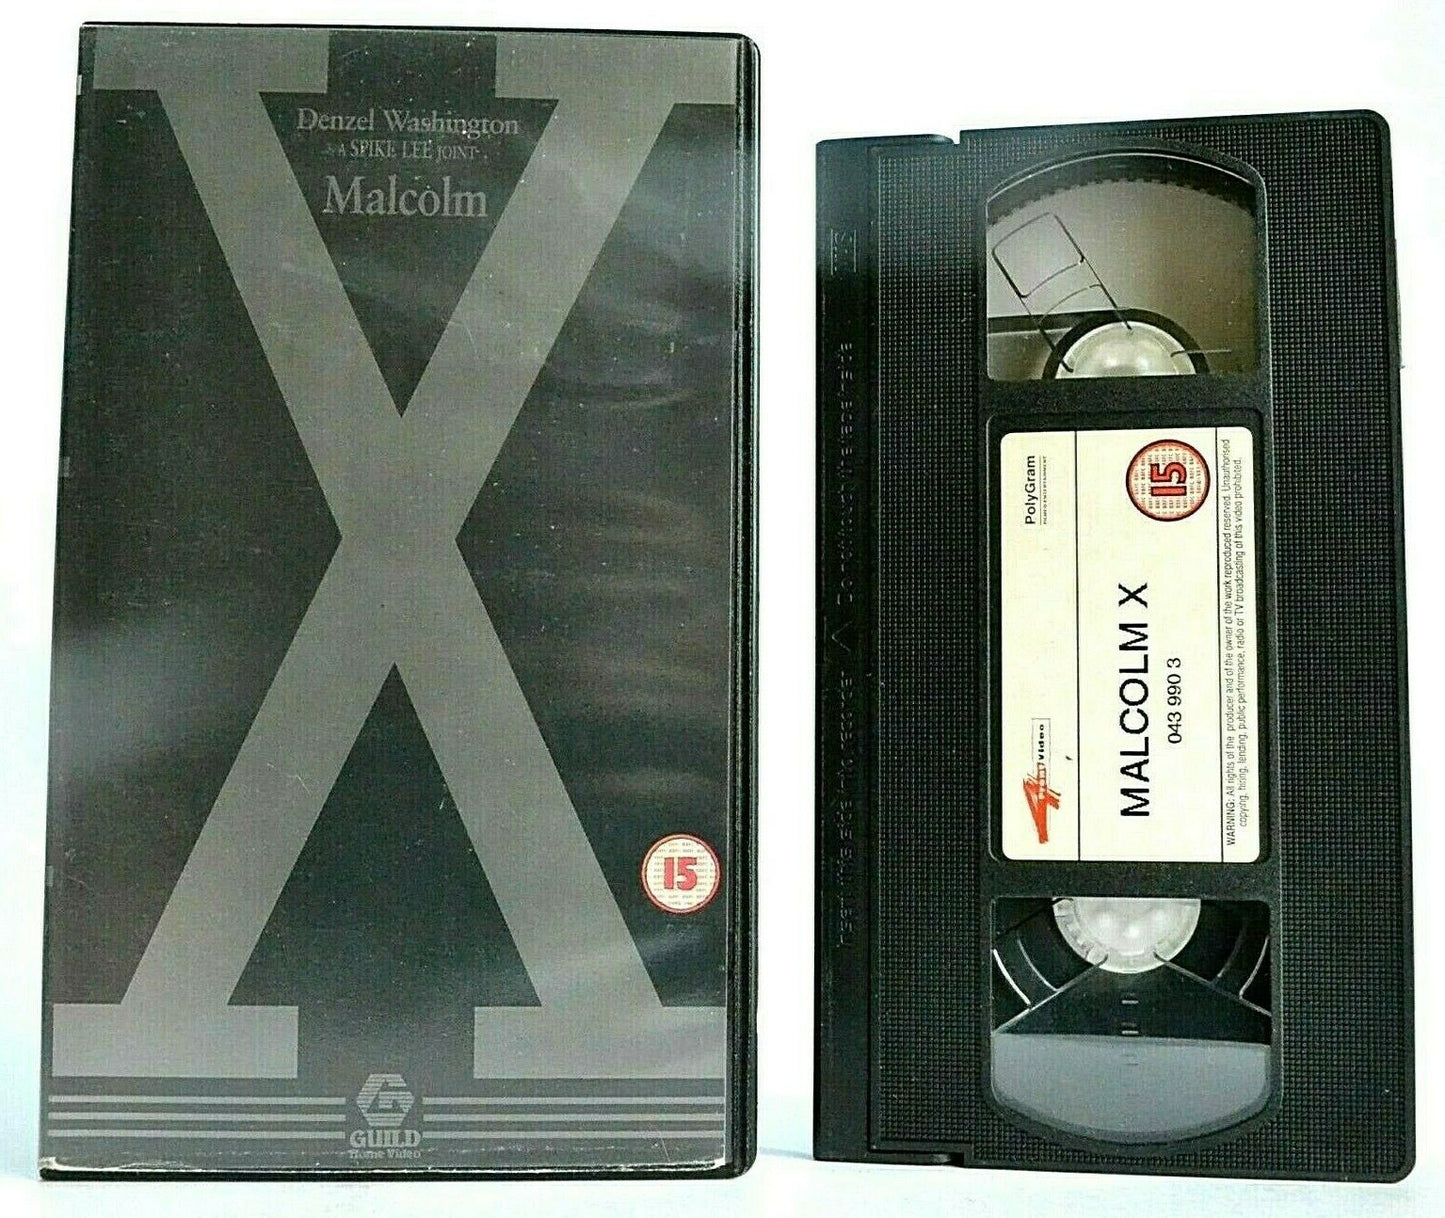 Malcolm X (1992) - Spike Lee - Biographical Drama - Denzel Washington - Pal VHS-